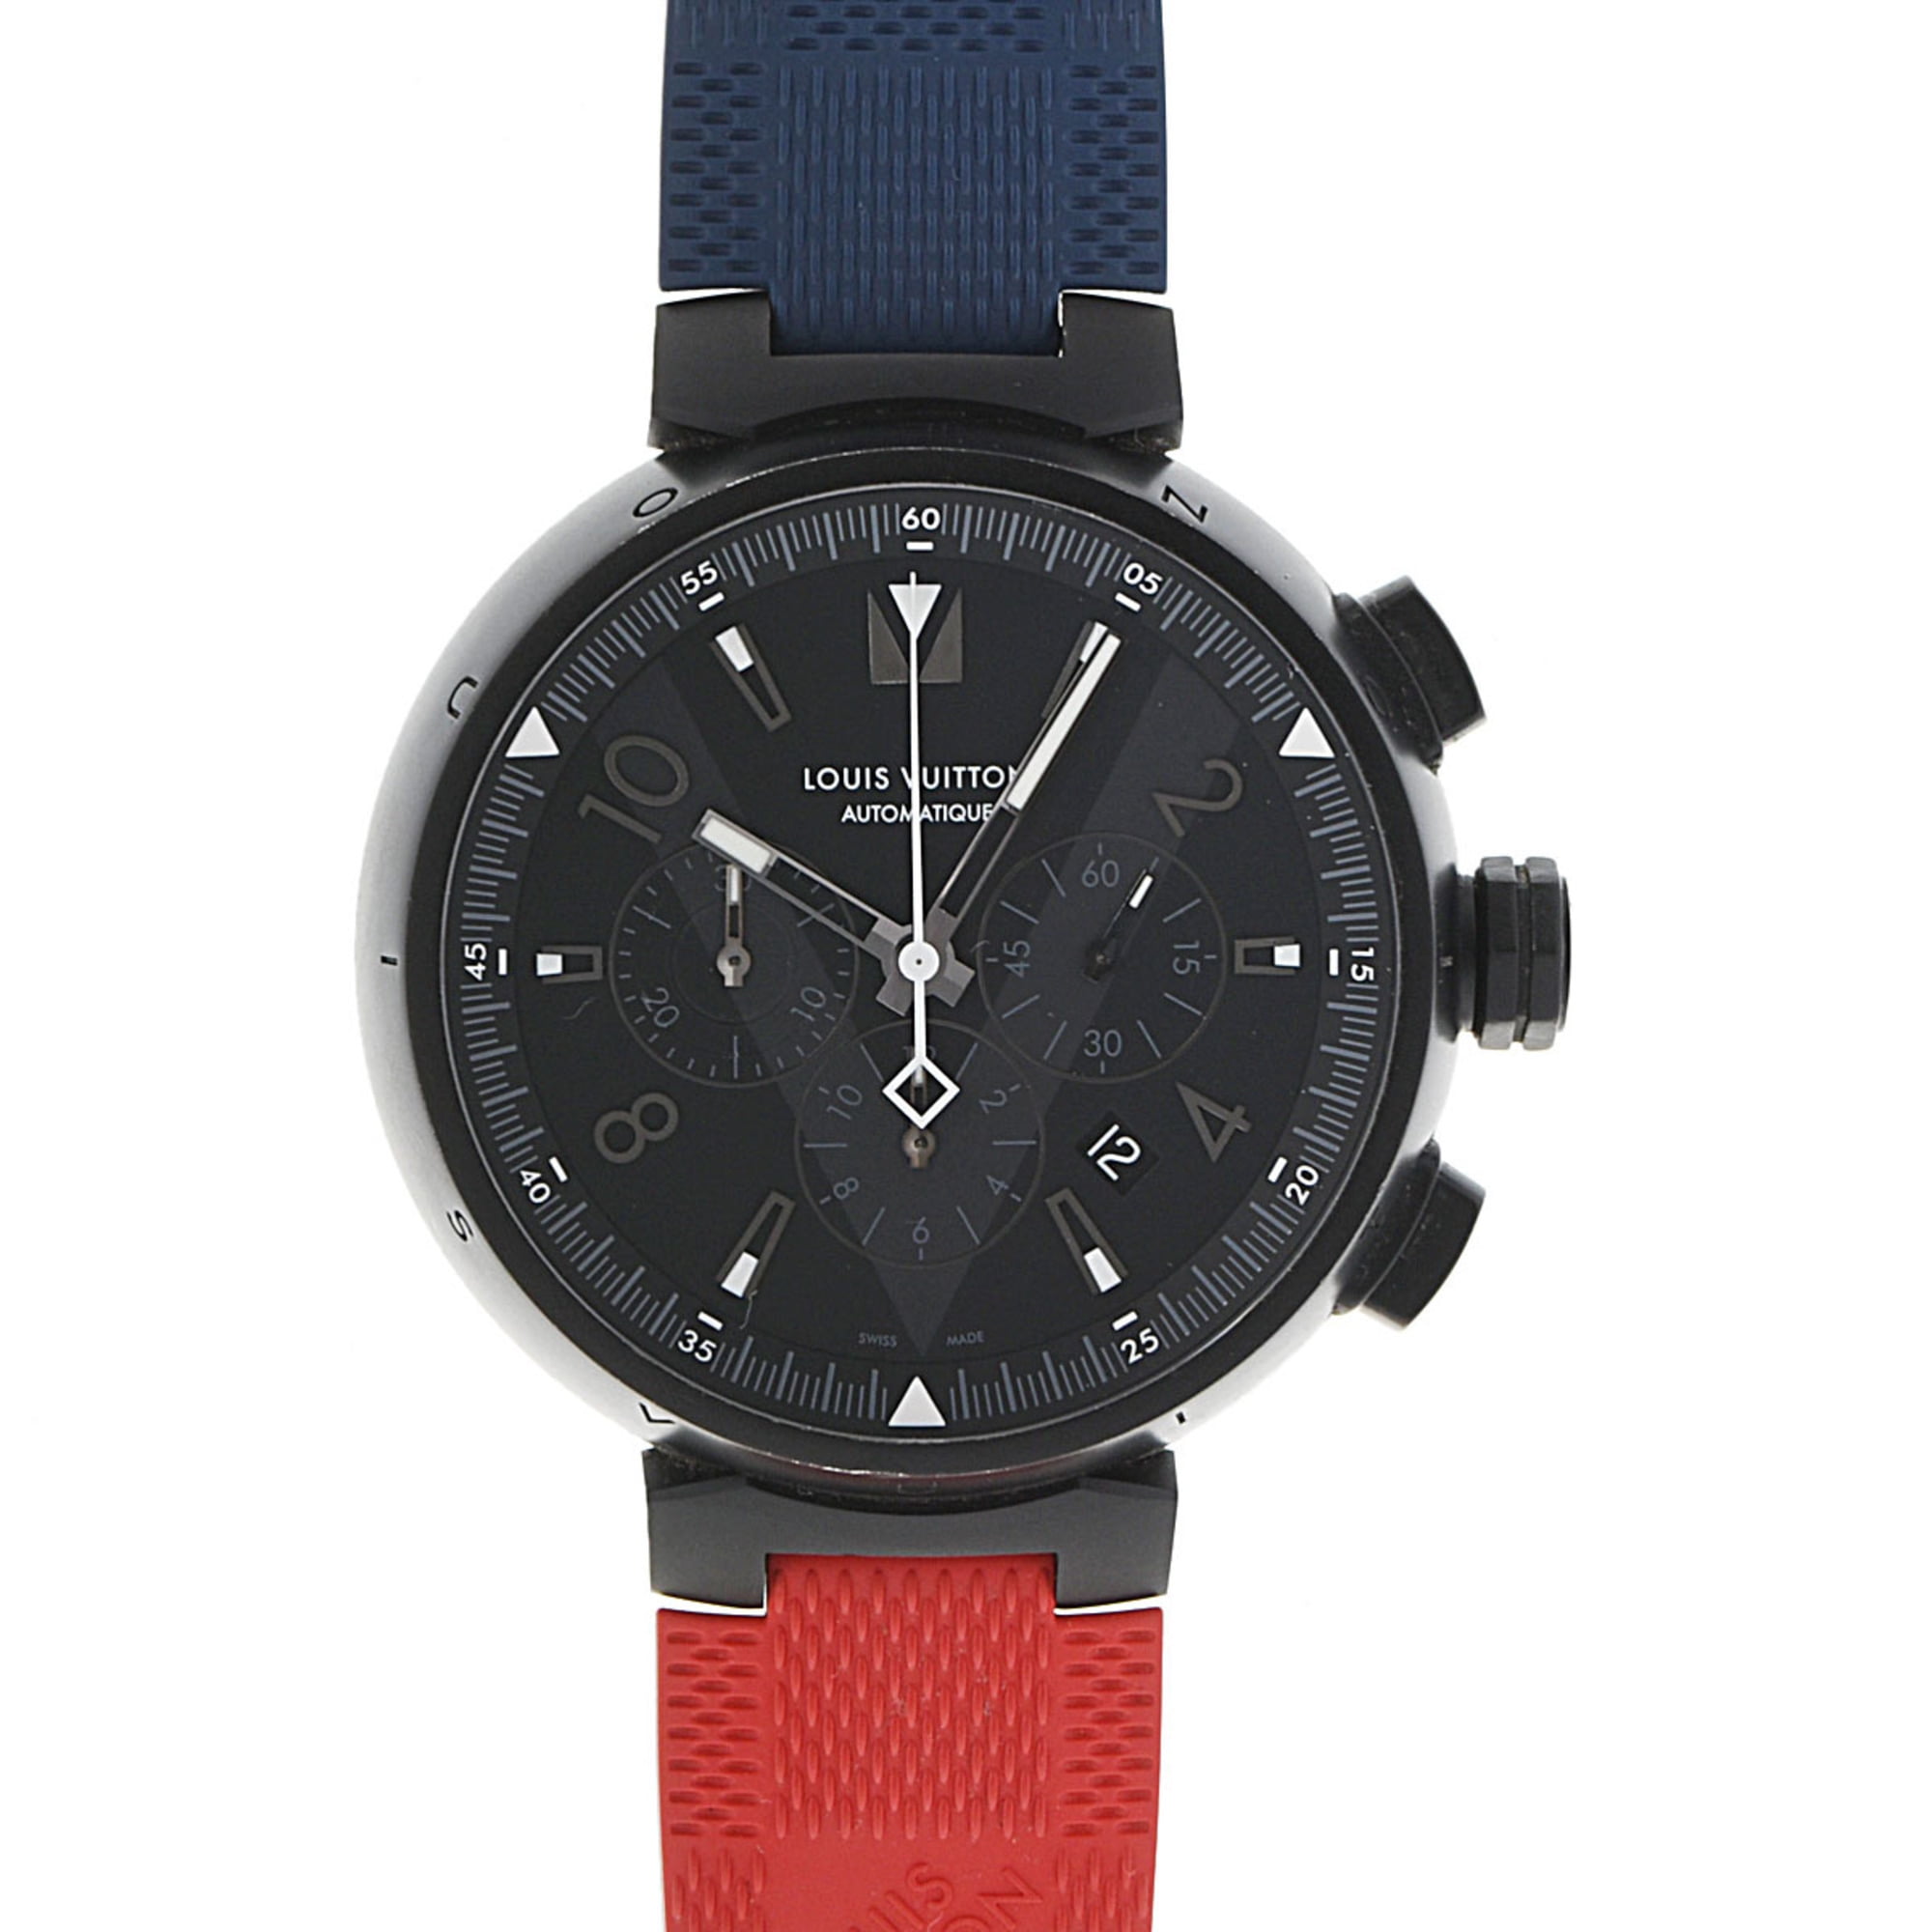 Jam Tangan Lou is Vuitton LV Tambour Chronograph Leather Watch